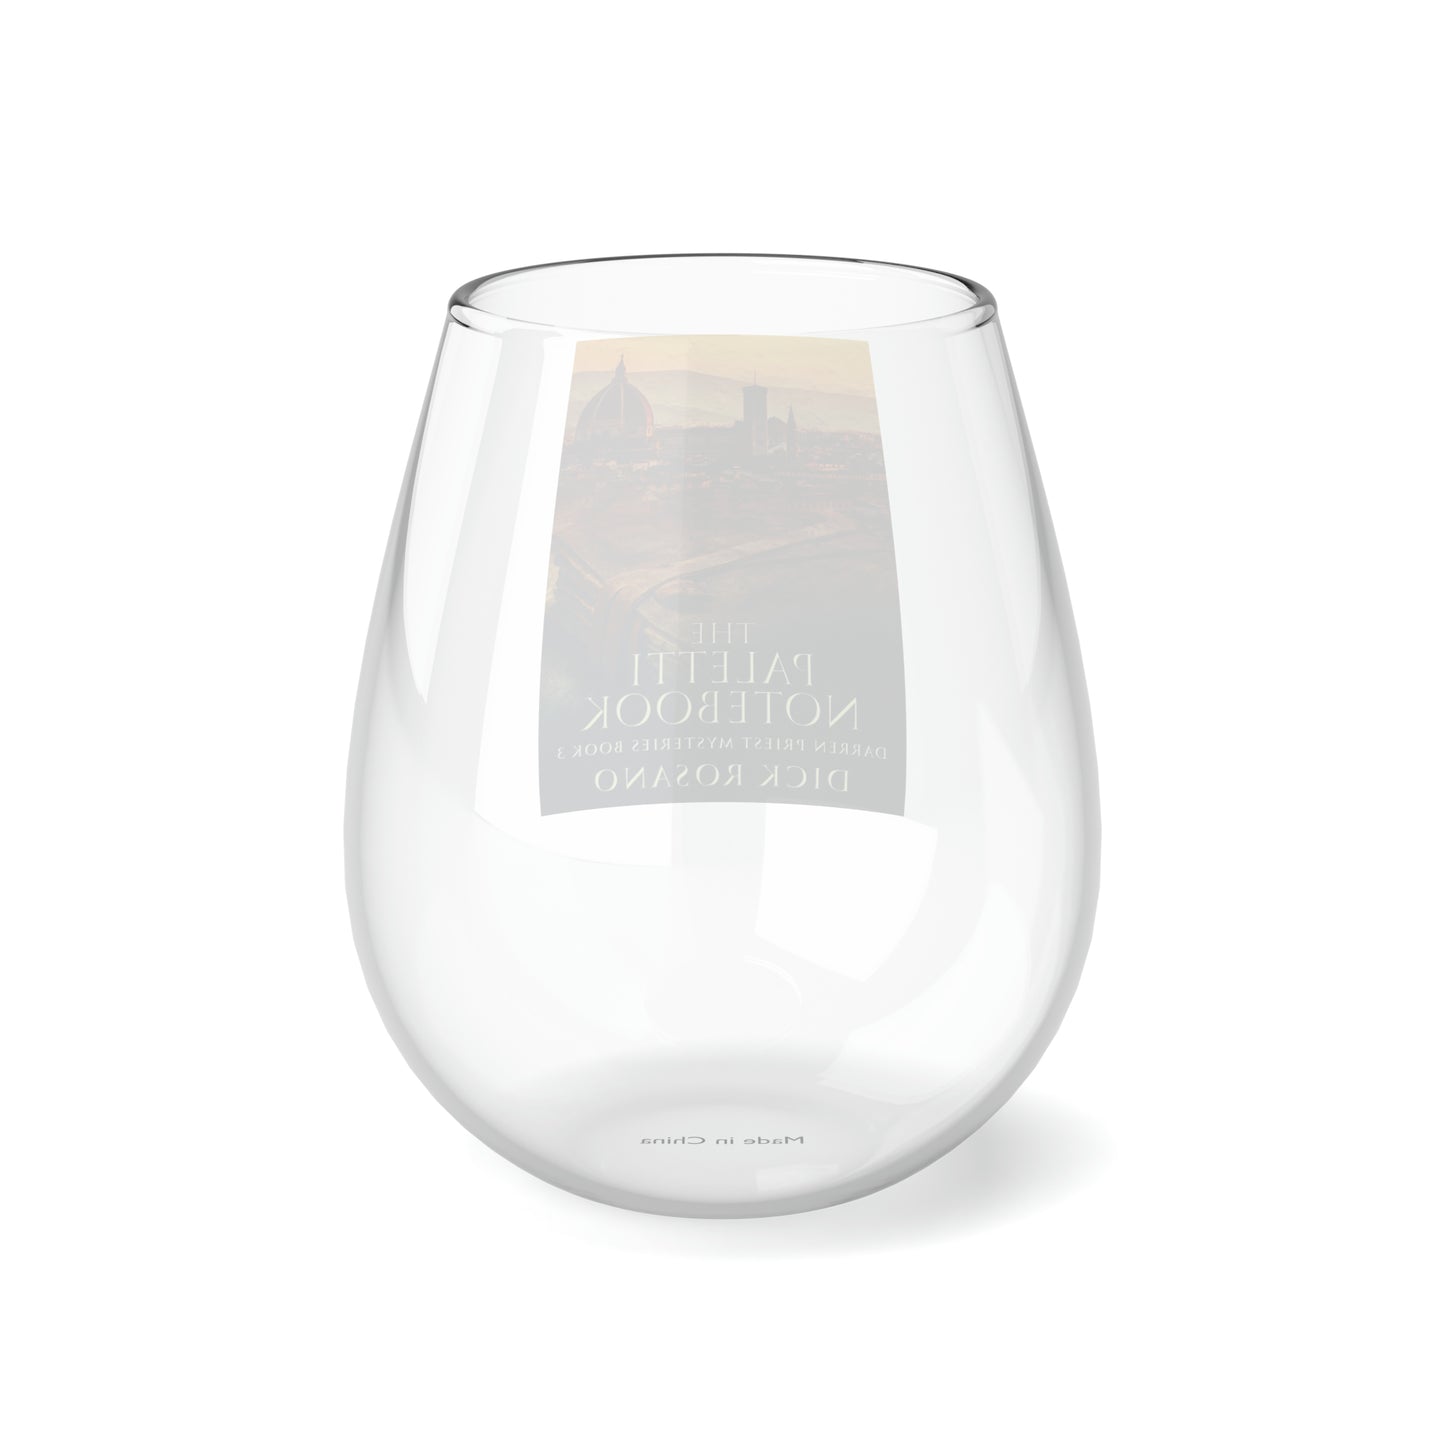 The Paletti Notebook - Stemless Wine Glass, 11.75oz